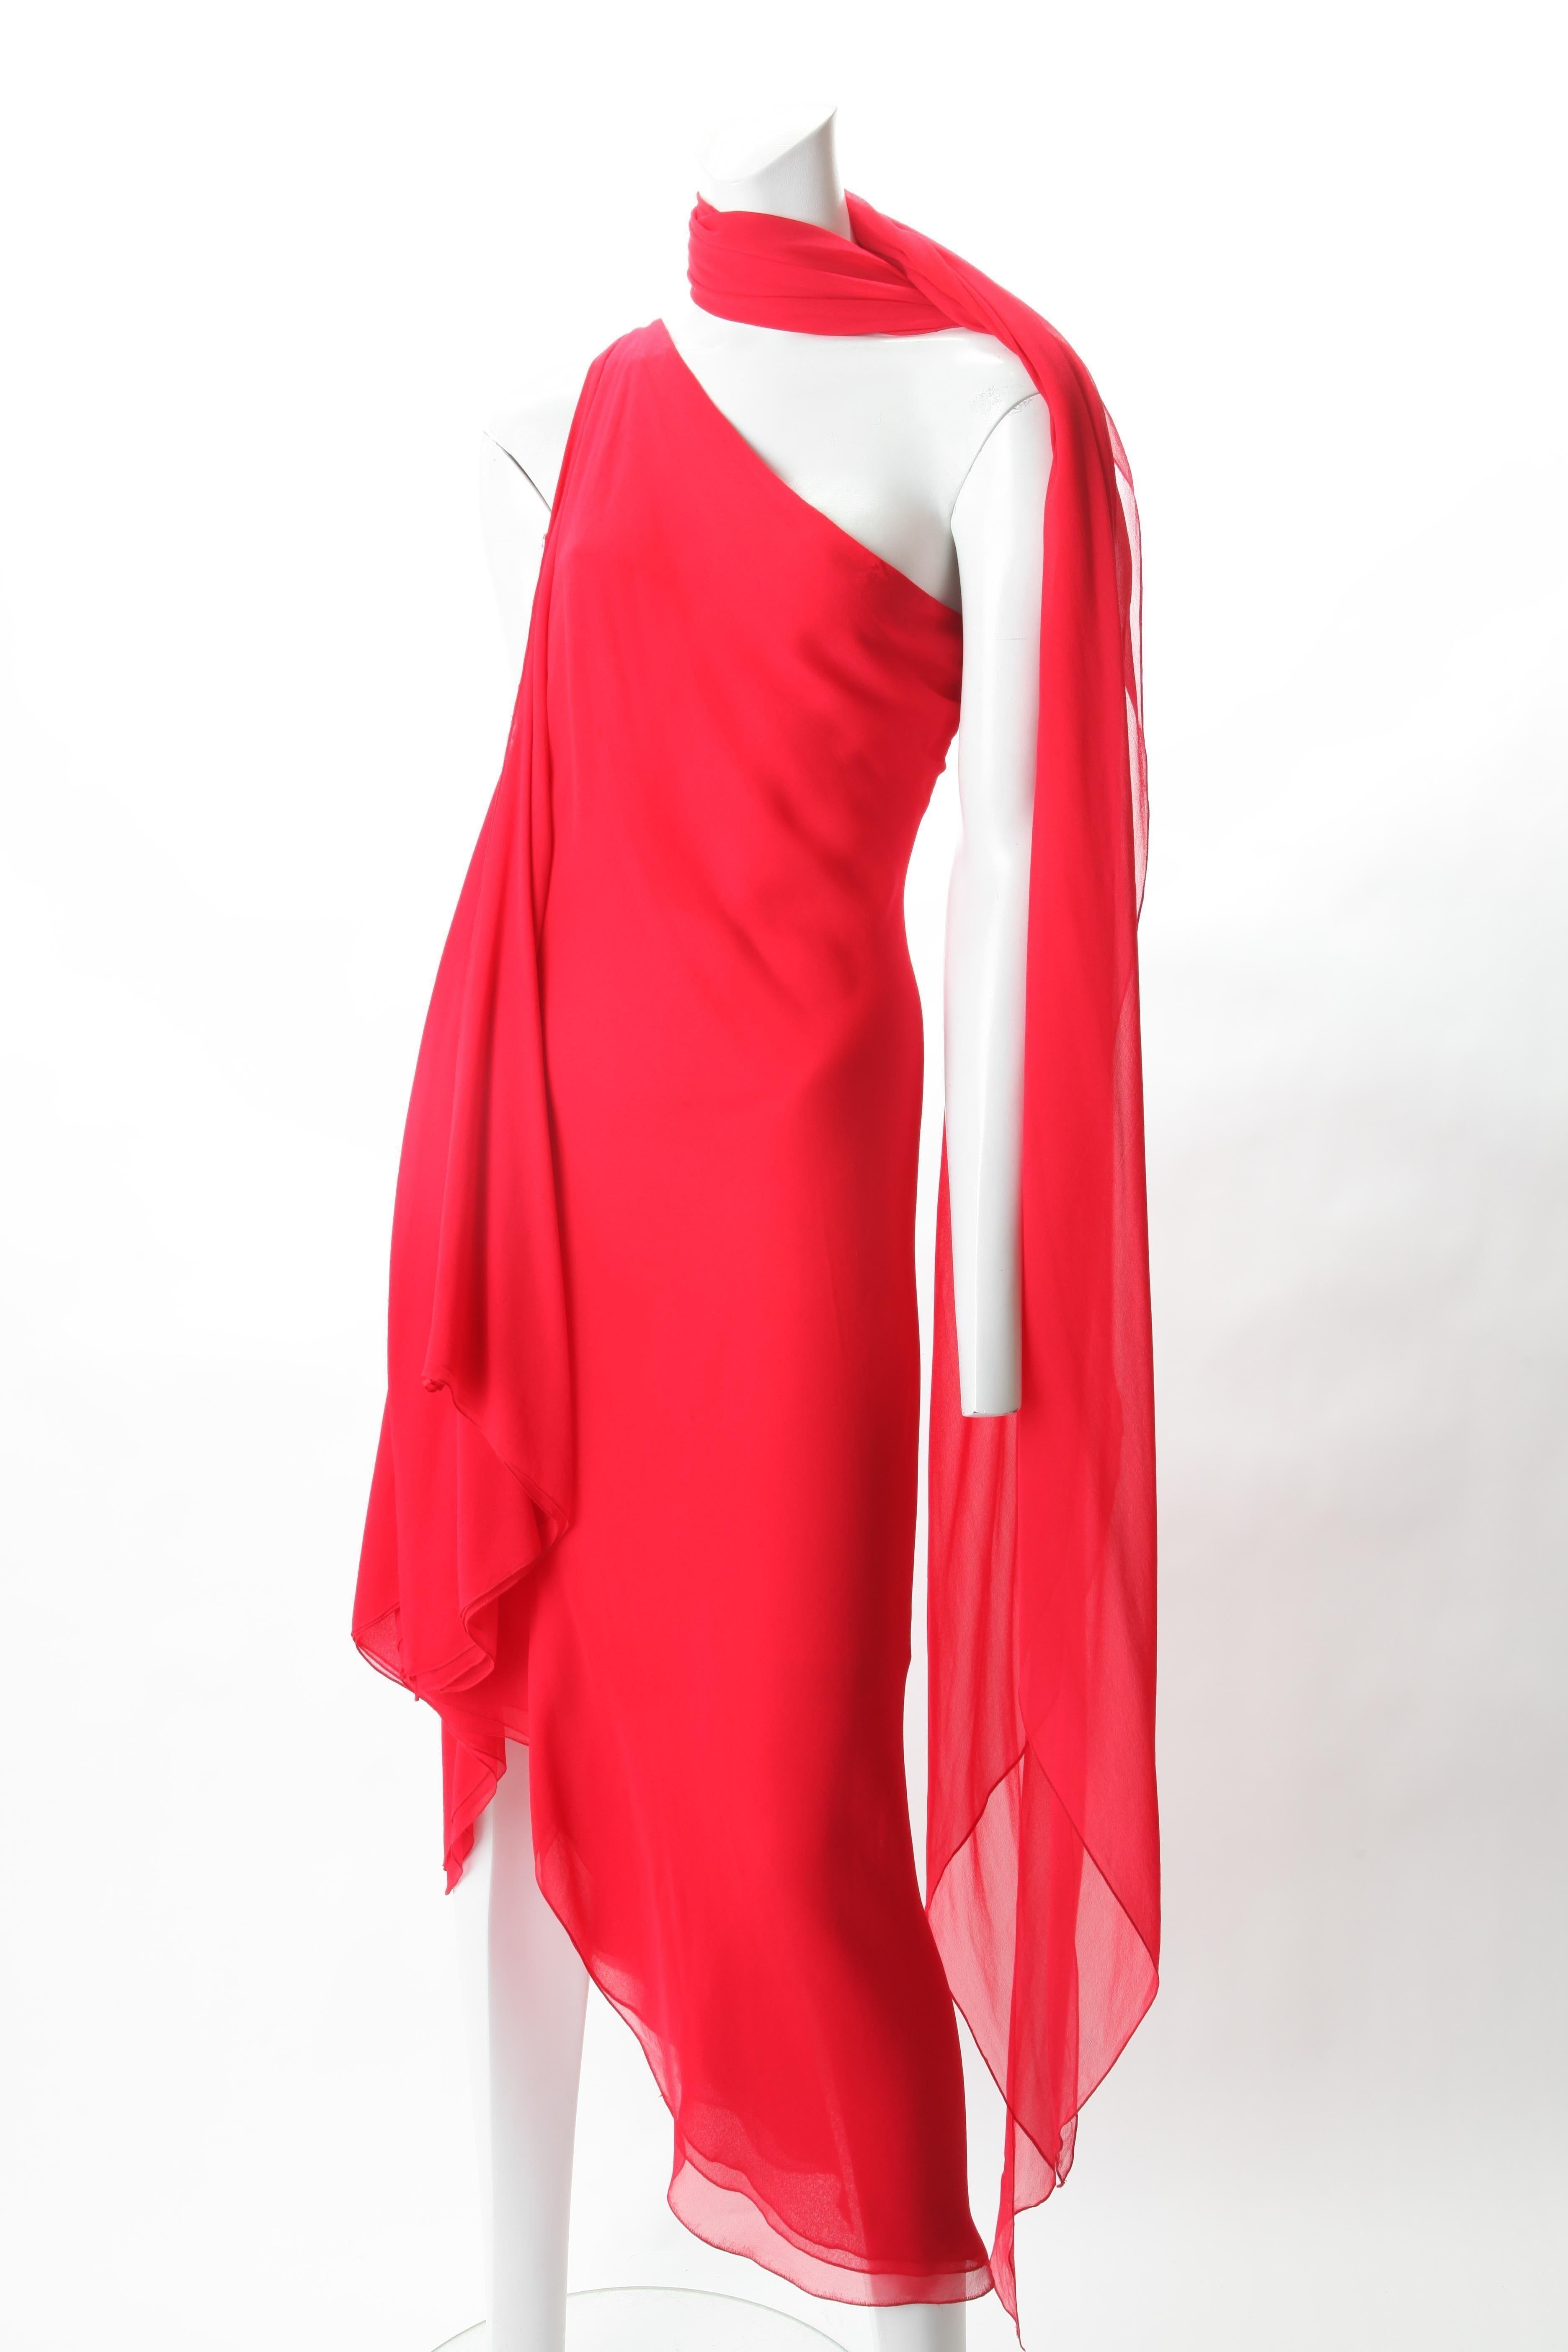 Halston Red Chiffon Dress with Sash, c. 1970s.
Halston Red chiffon one-shoulder dress featuring 